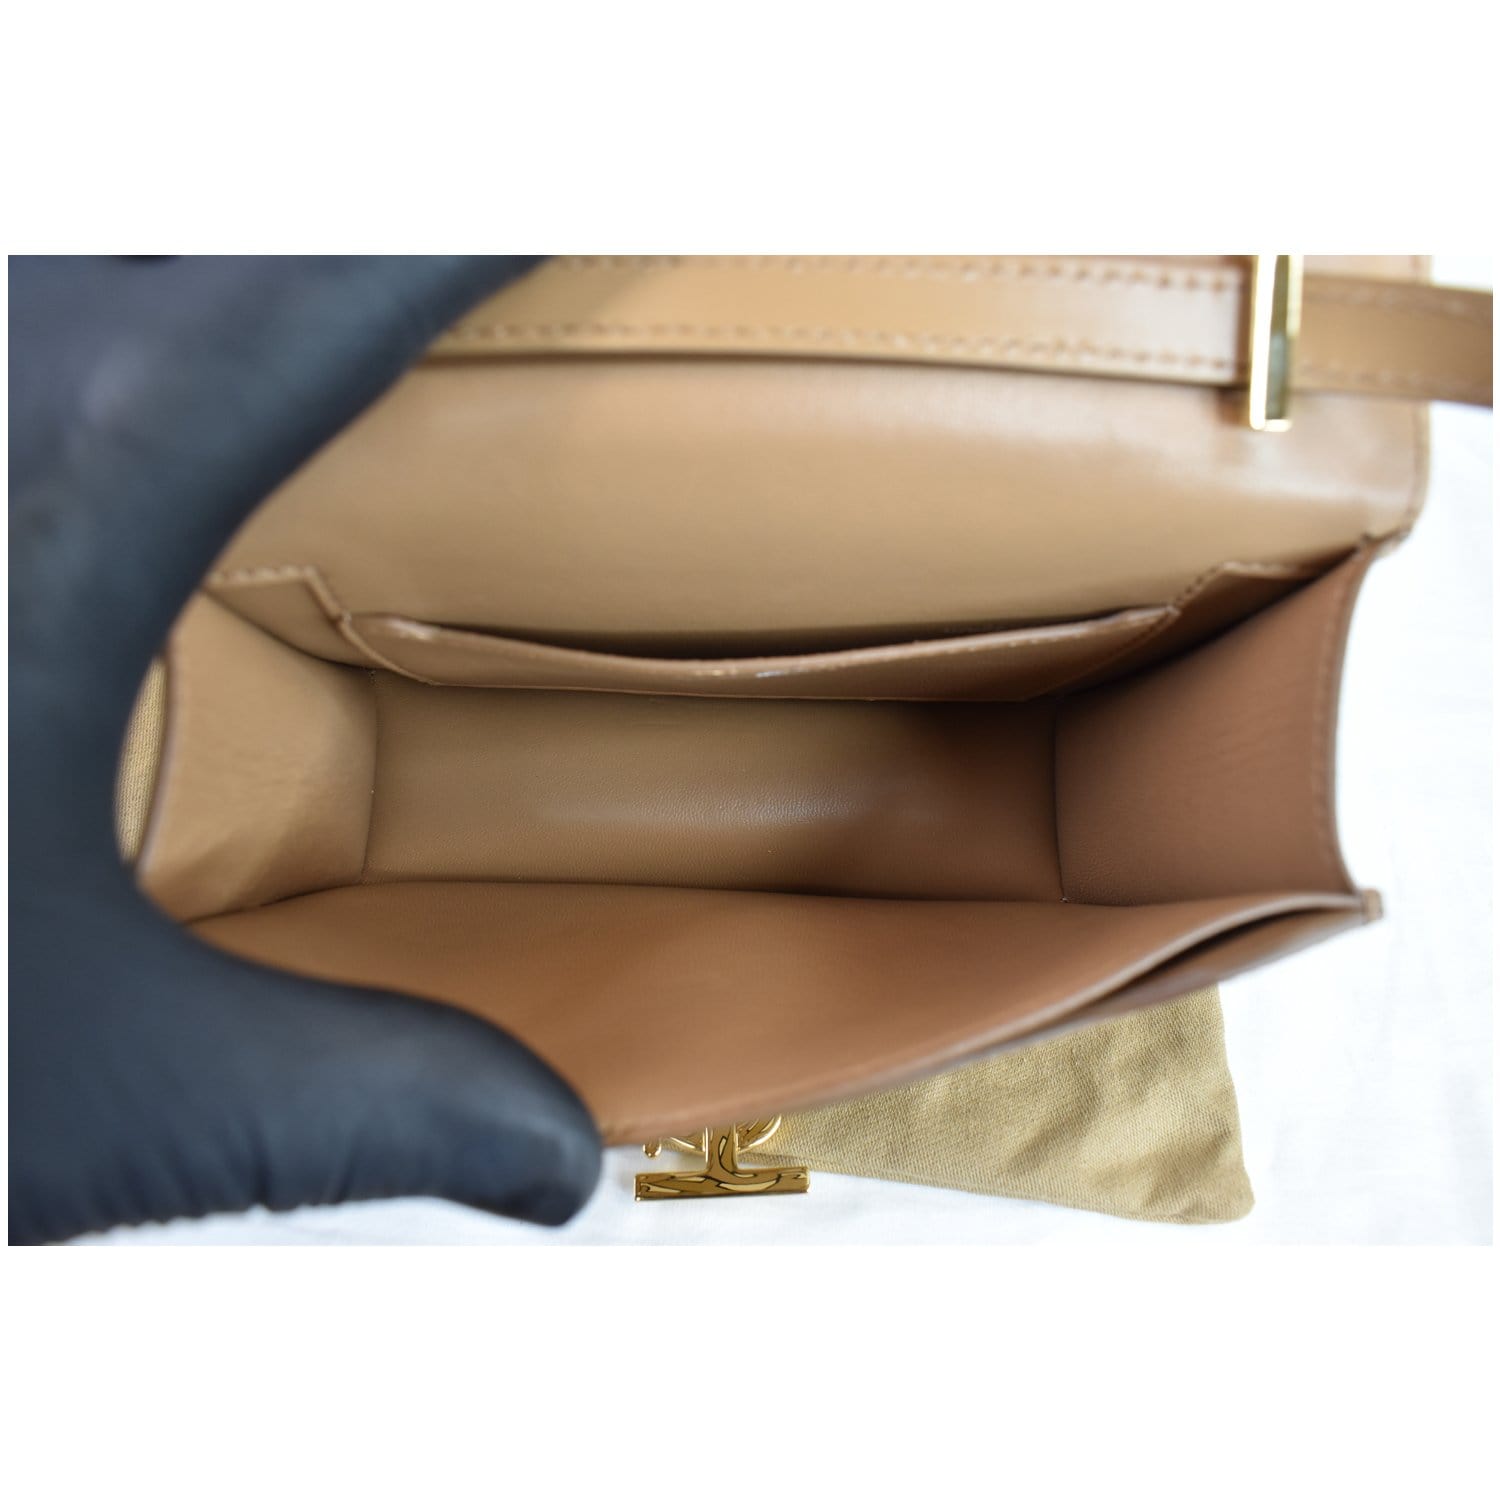 Burberry TB Monogram Bag Leather Envelope Crossbody / Clutch